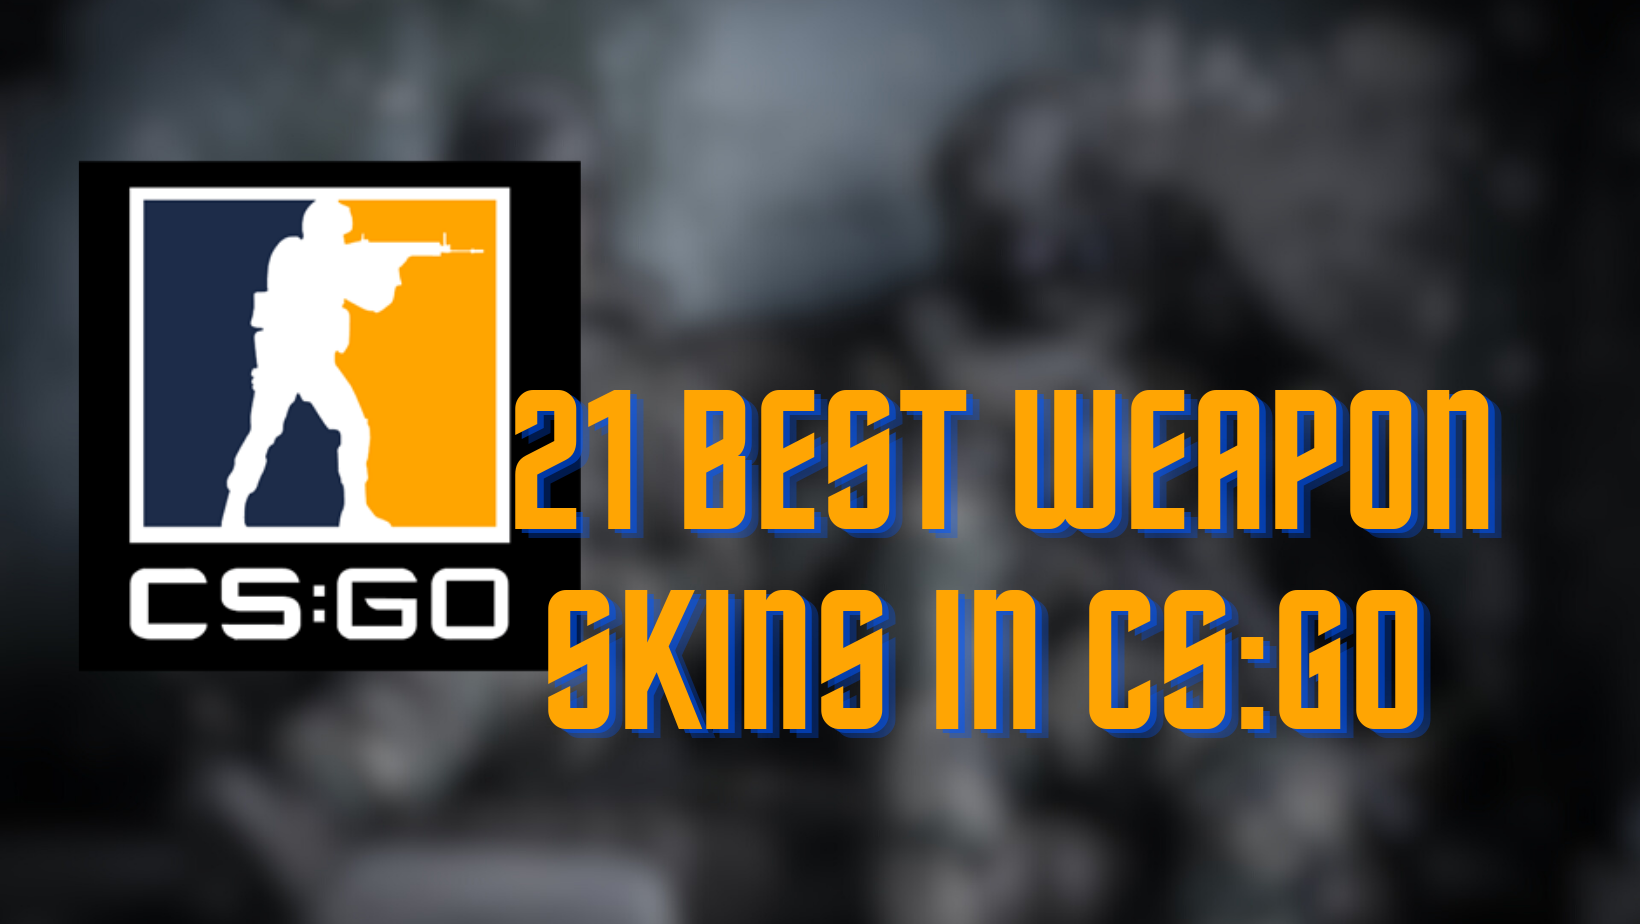 Best Weapon Skins in CS:GO